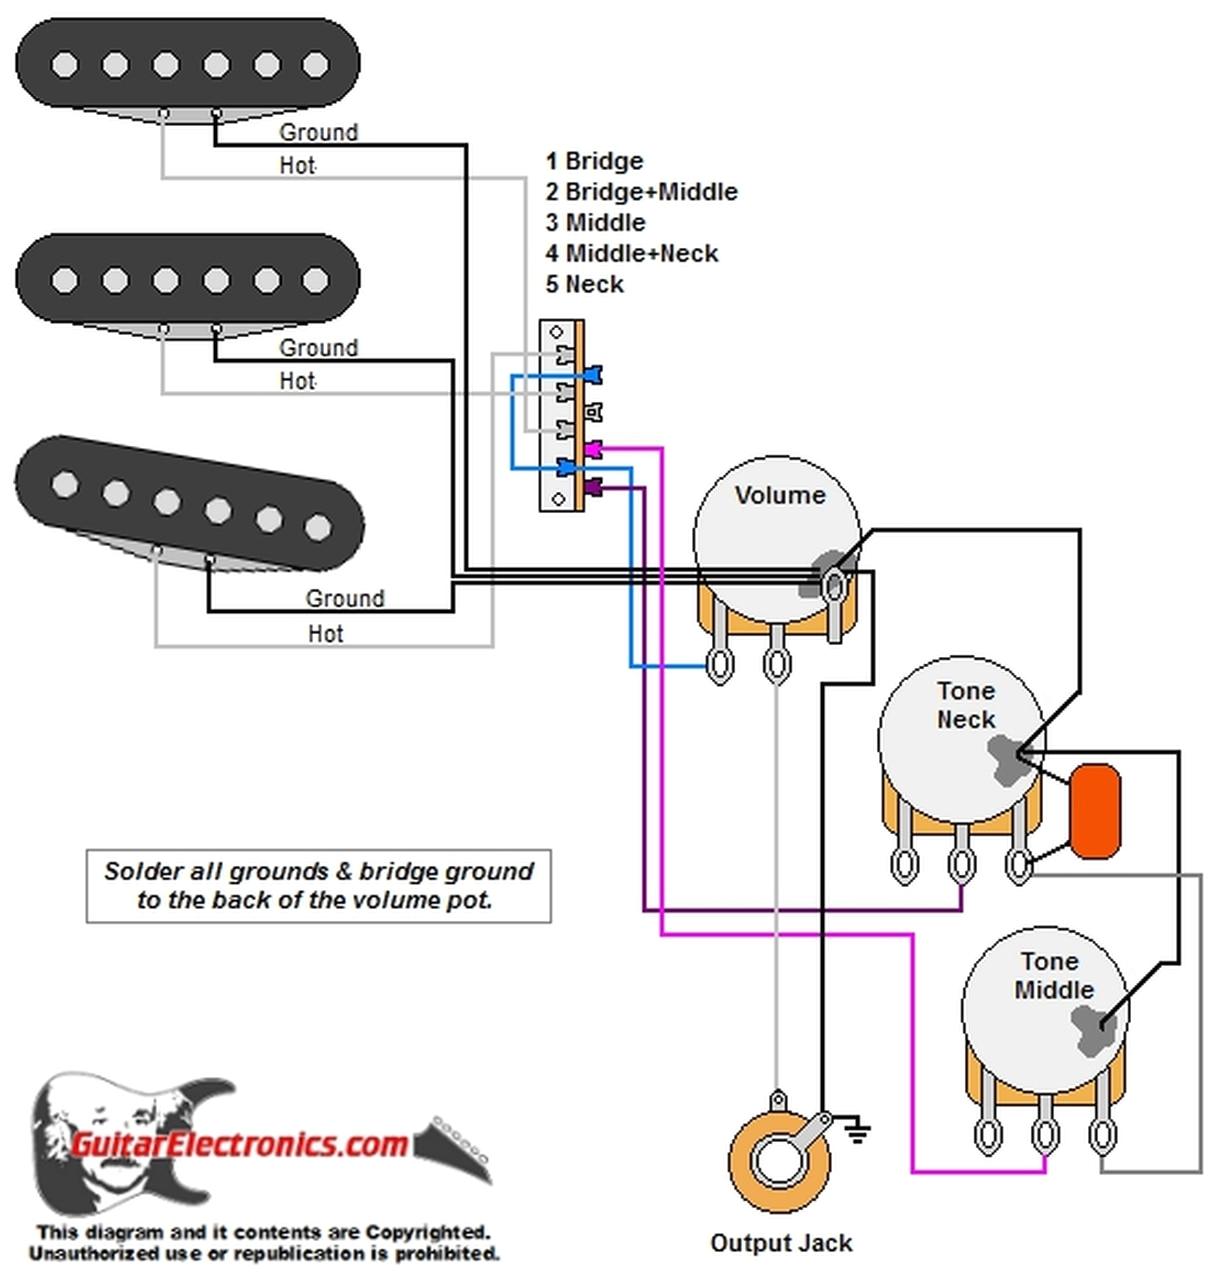 fasco motors wiring diagram 115 230 wiring diagram databasegould century motor wiring diagram